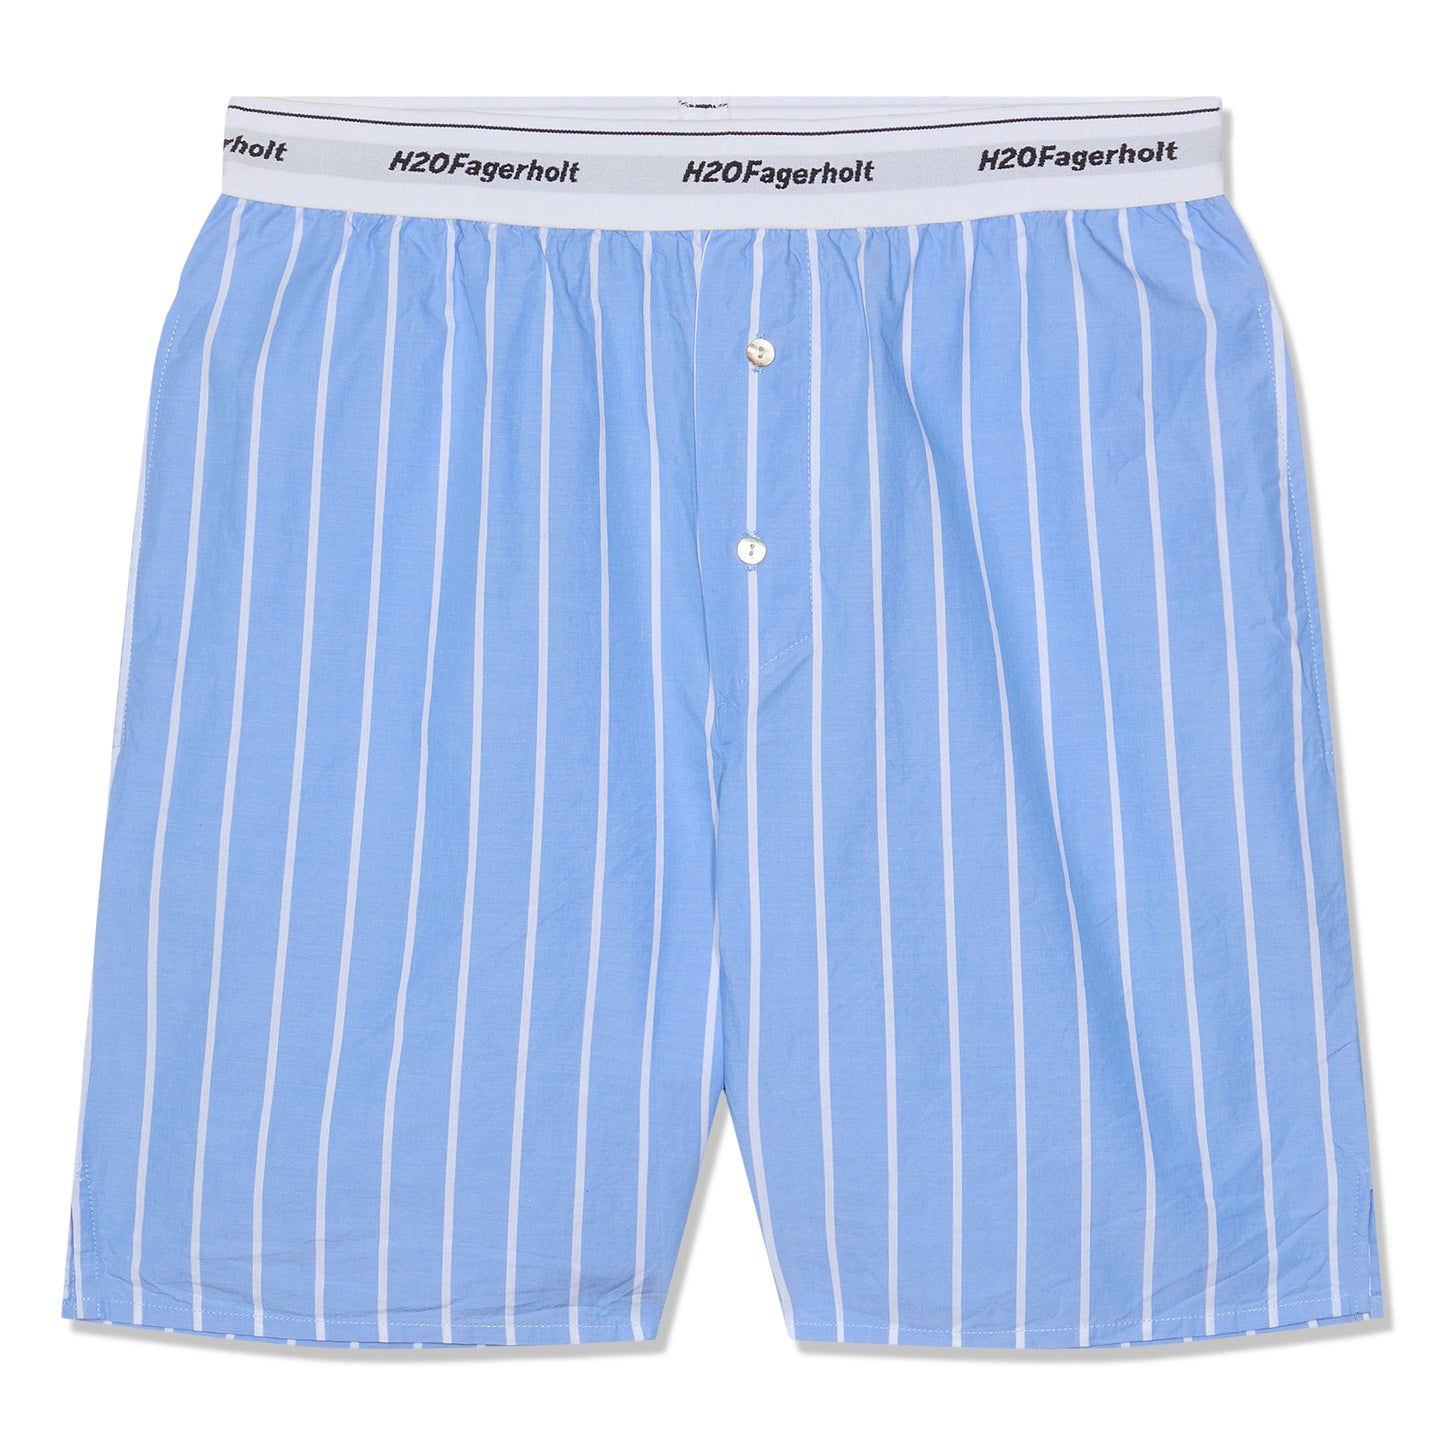 H2OFagerholt Box Shorts (Blue Stripe)